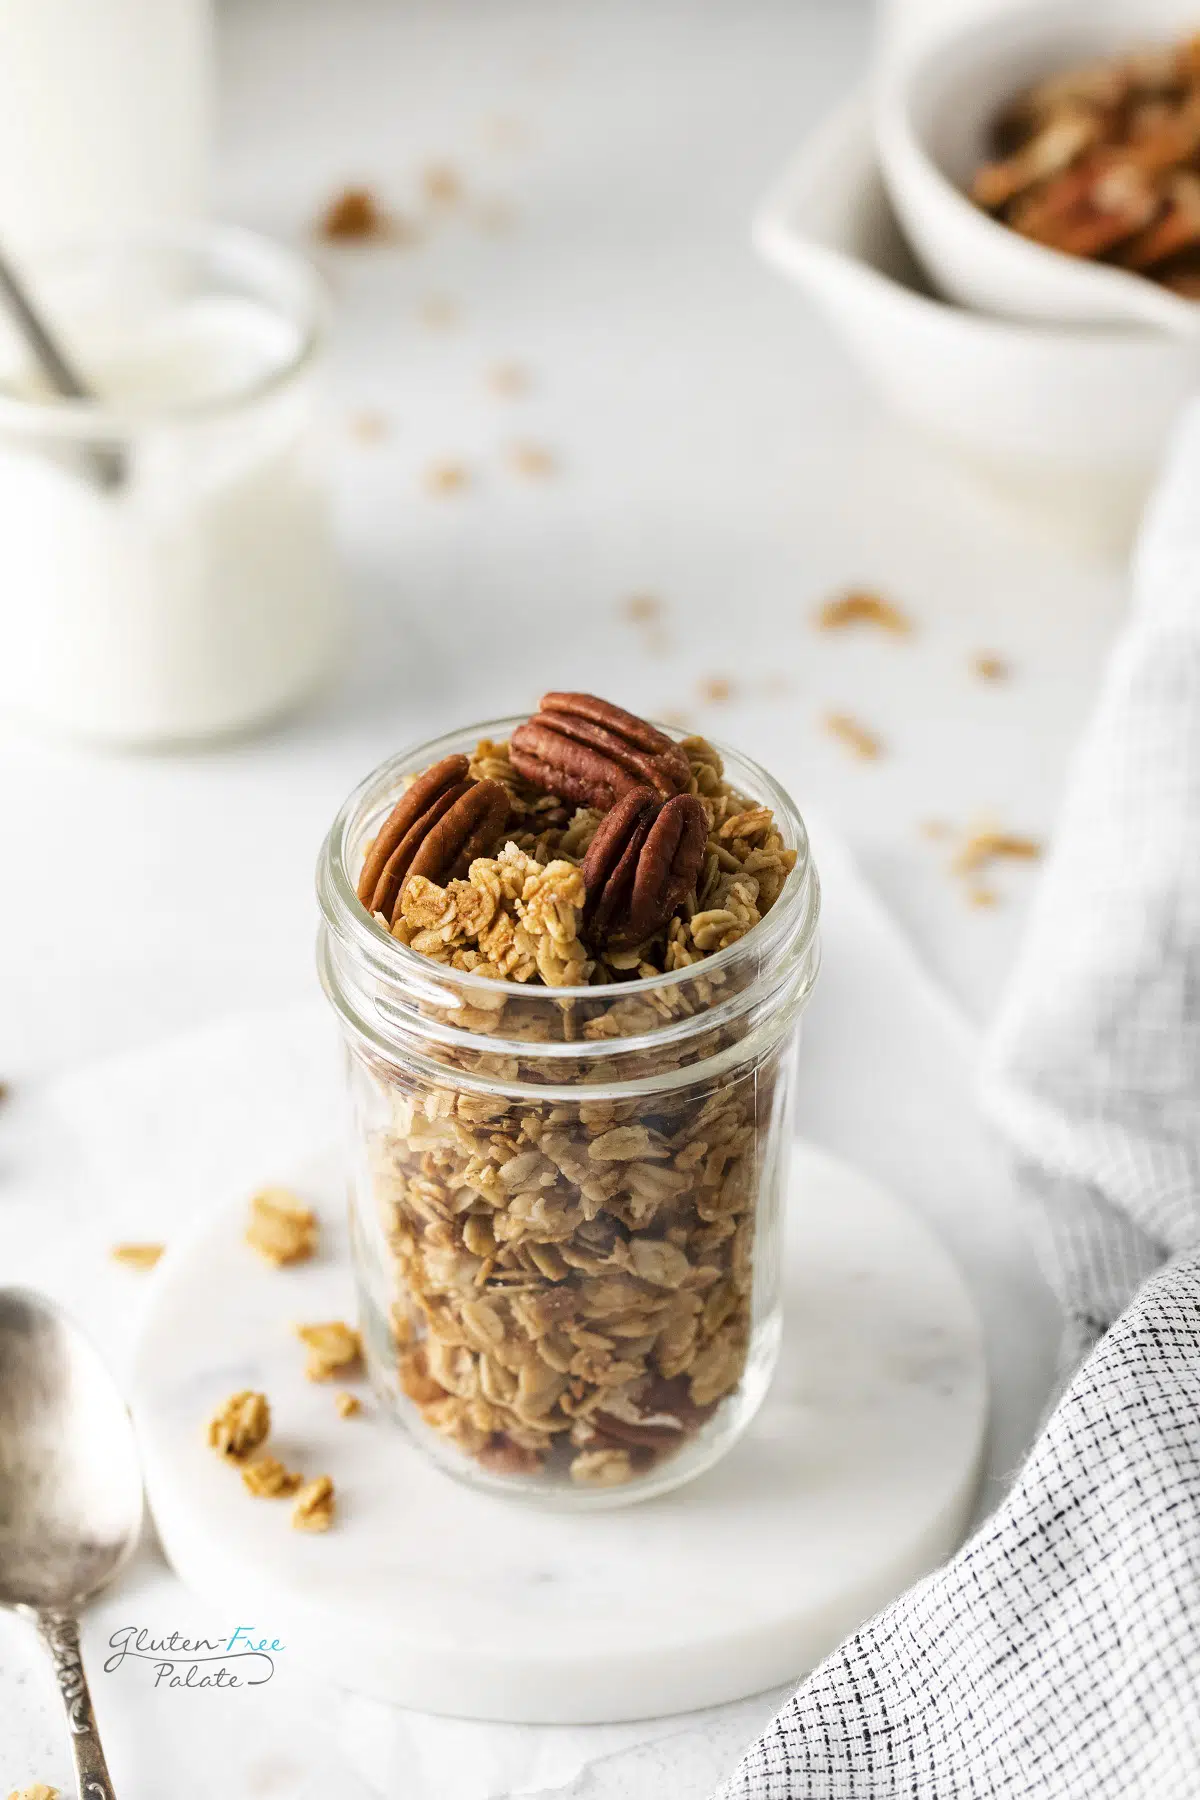 gluten-free vegan granola in a glass jar